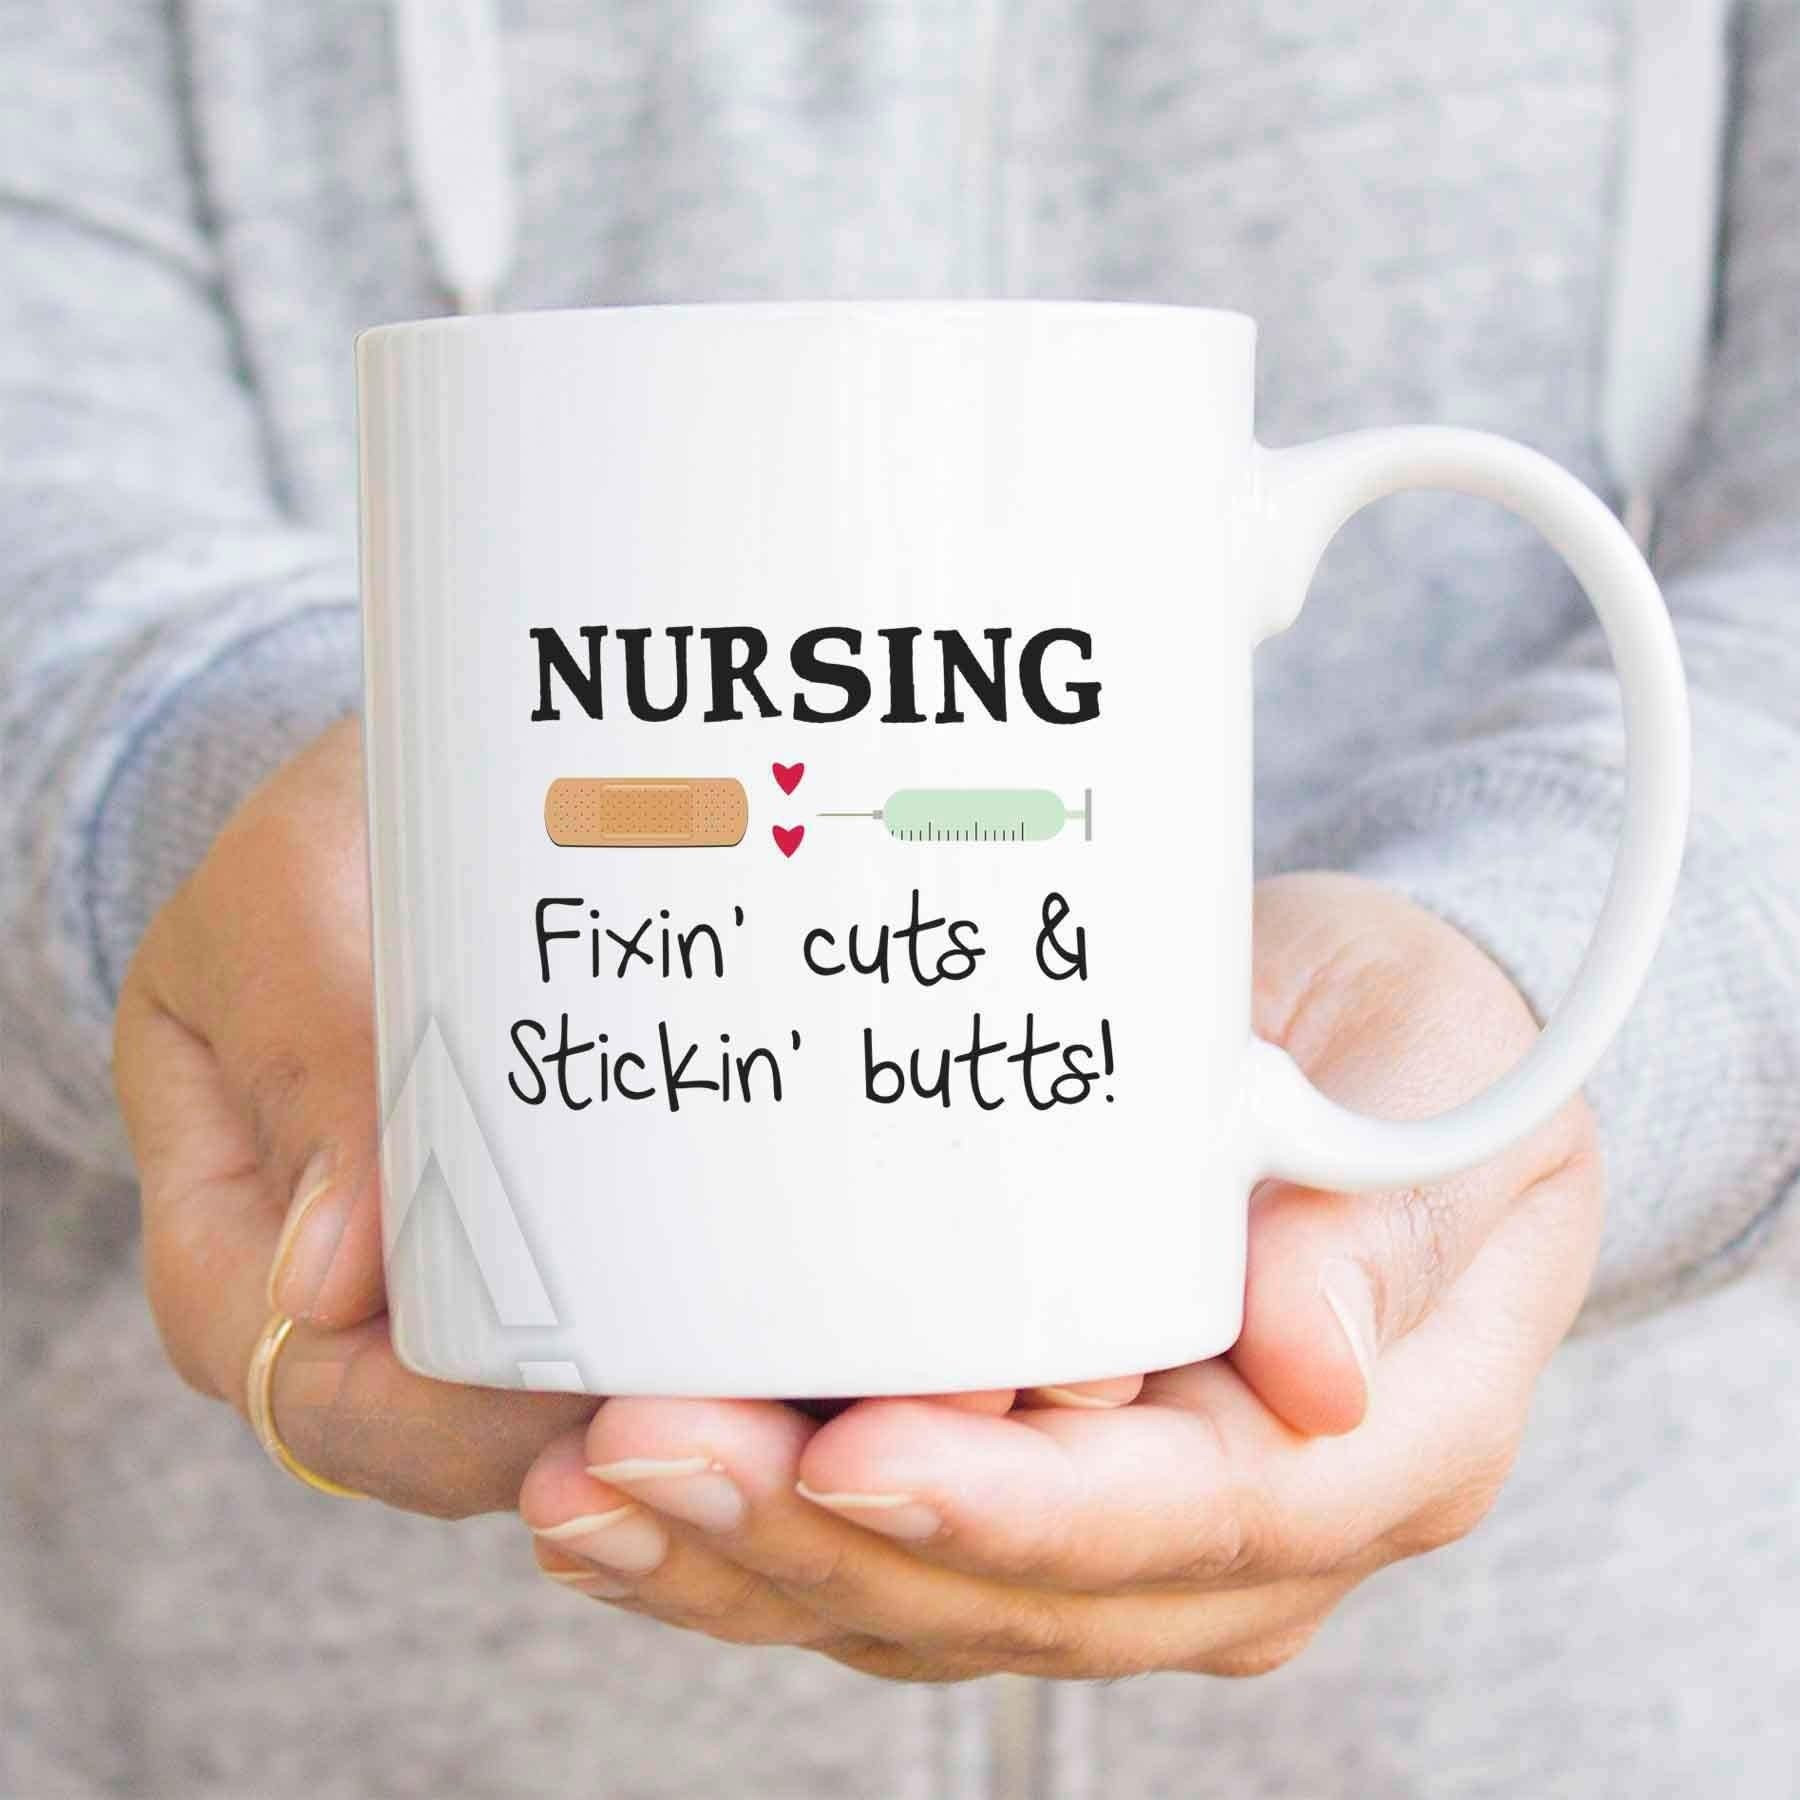 College Graduation Gift Ideas For Nurses
 10 Unique Nursing School Graduation Gift Ideas 2019